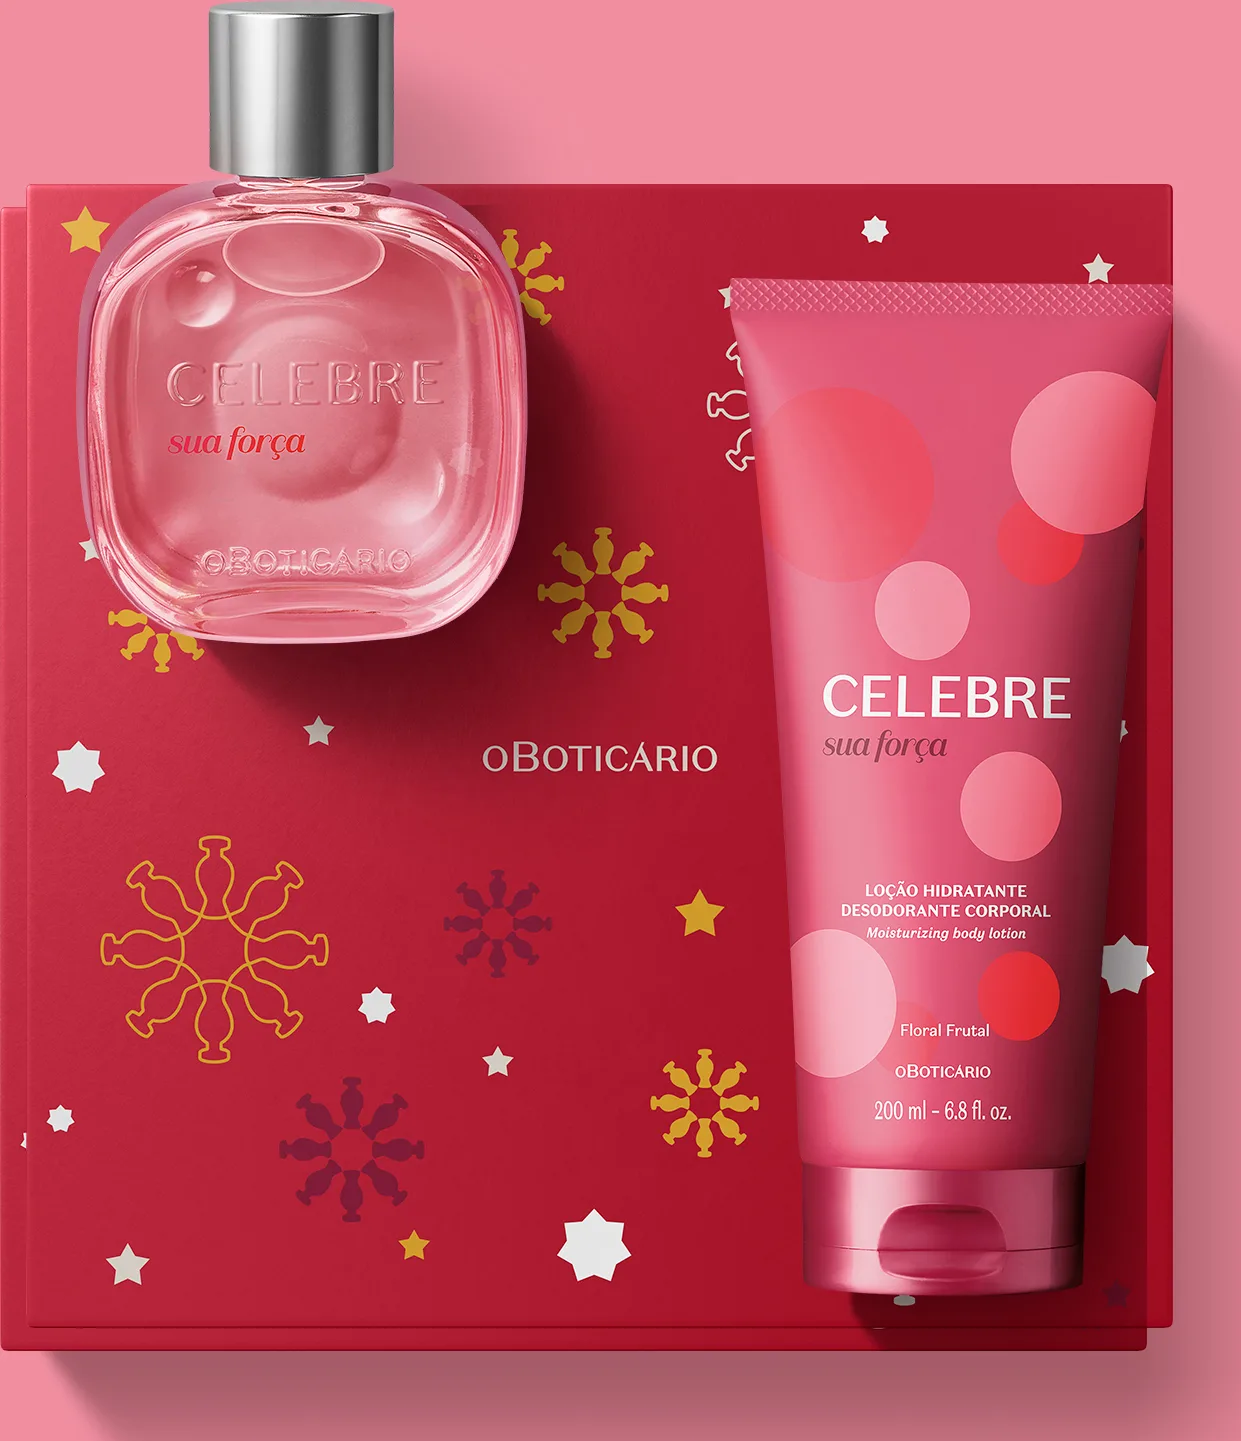 Kit Glamour Secrets Black – Perfume & Cia – By Mabi